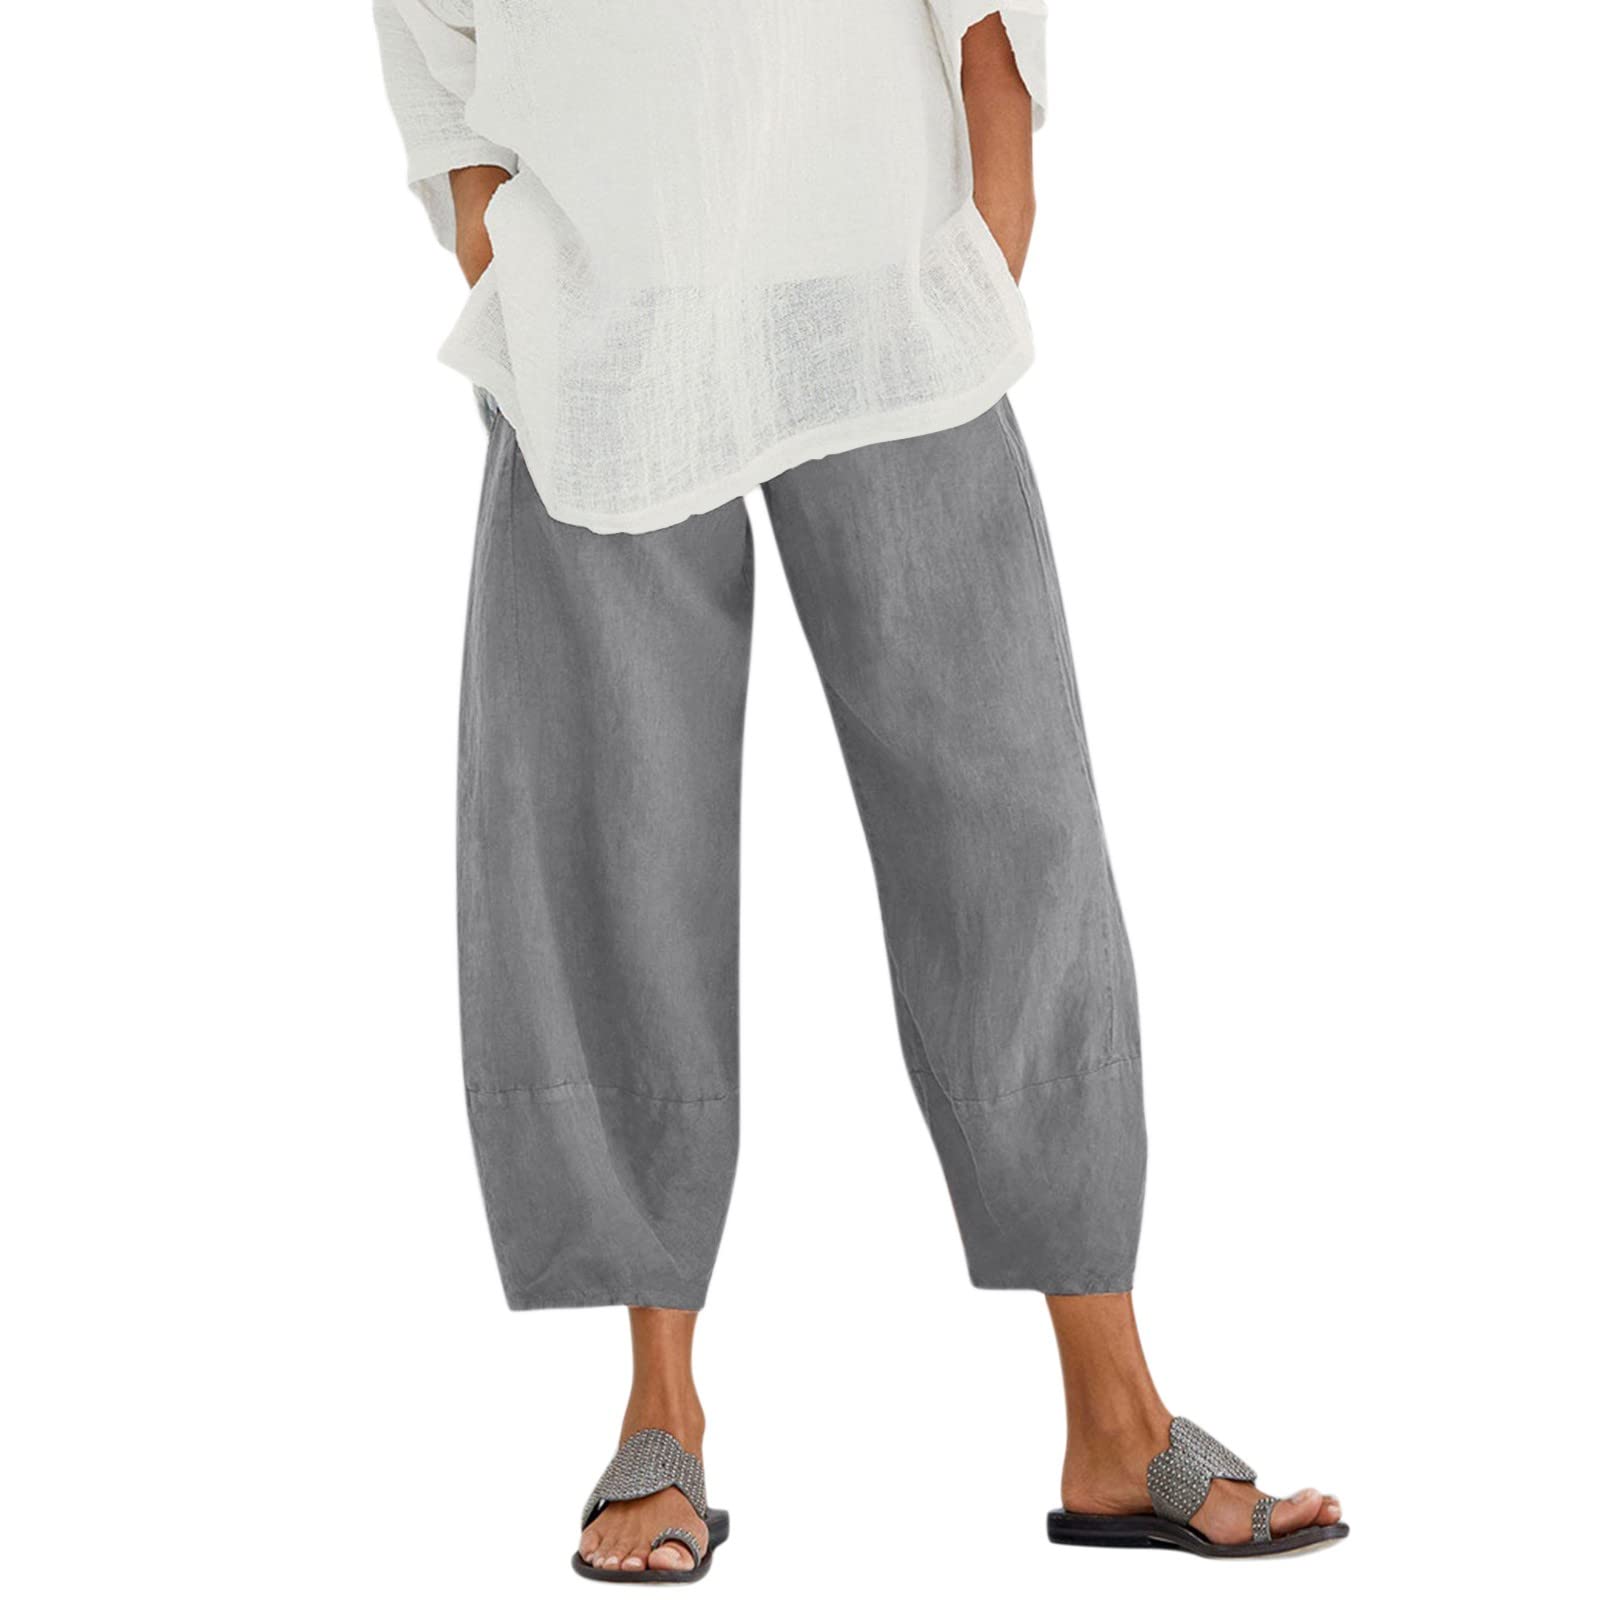  Capris Pants For Women Casual Summer Cotton Linen 3/4 Pants  Wide Leg Capris Lightweight Baggy Cropped Lounge Trousers Grey